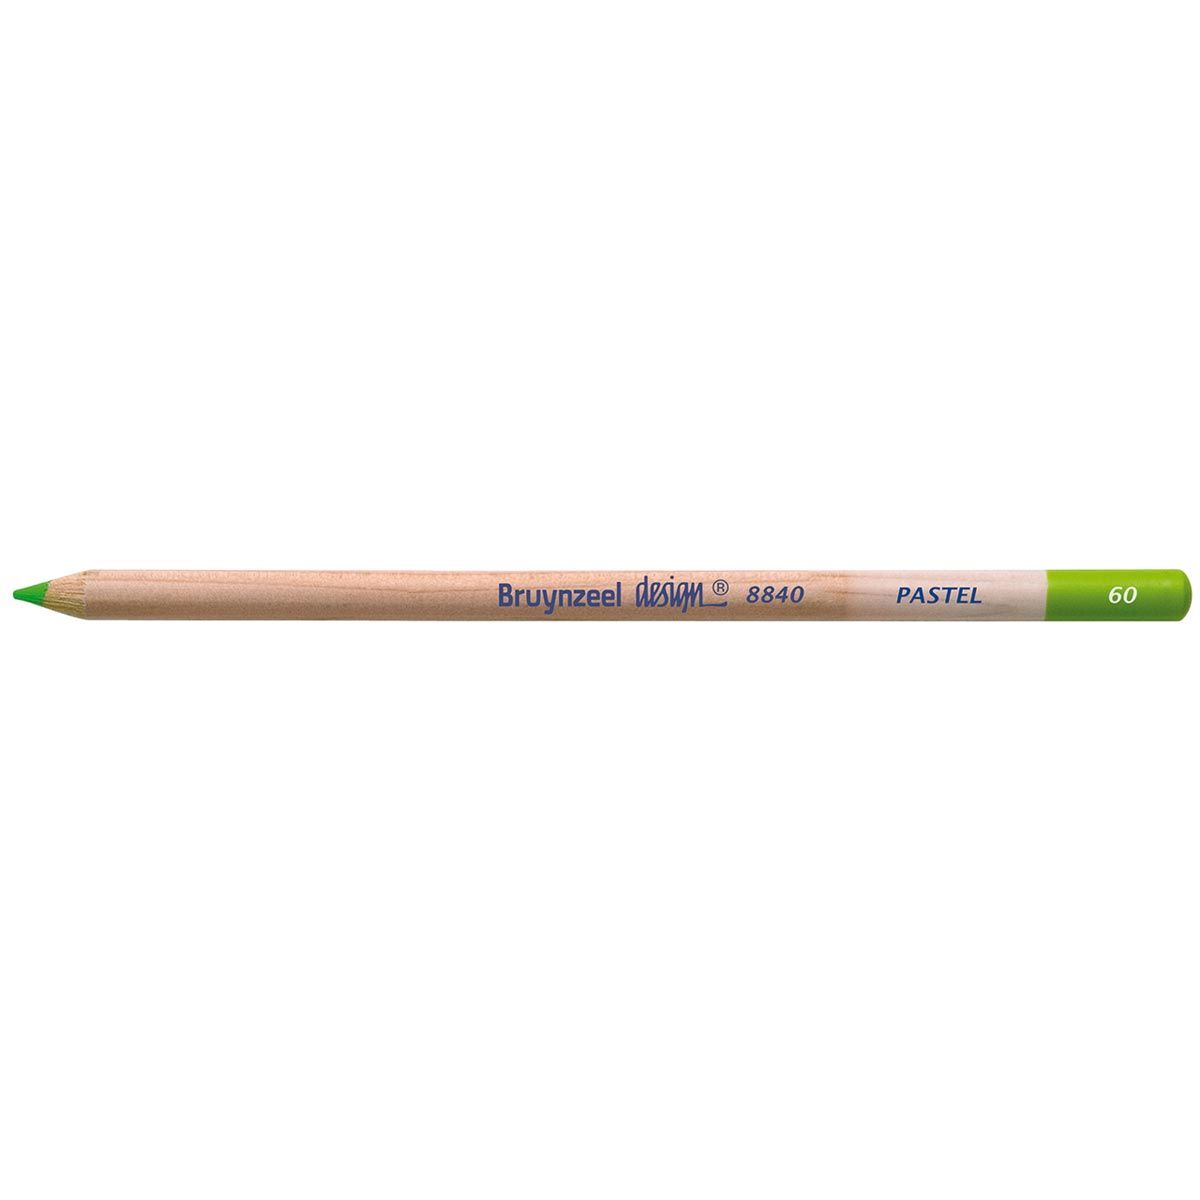 Bruynzeel Design Pastel Pencil - Light Green 60